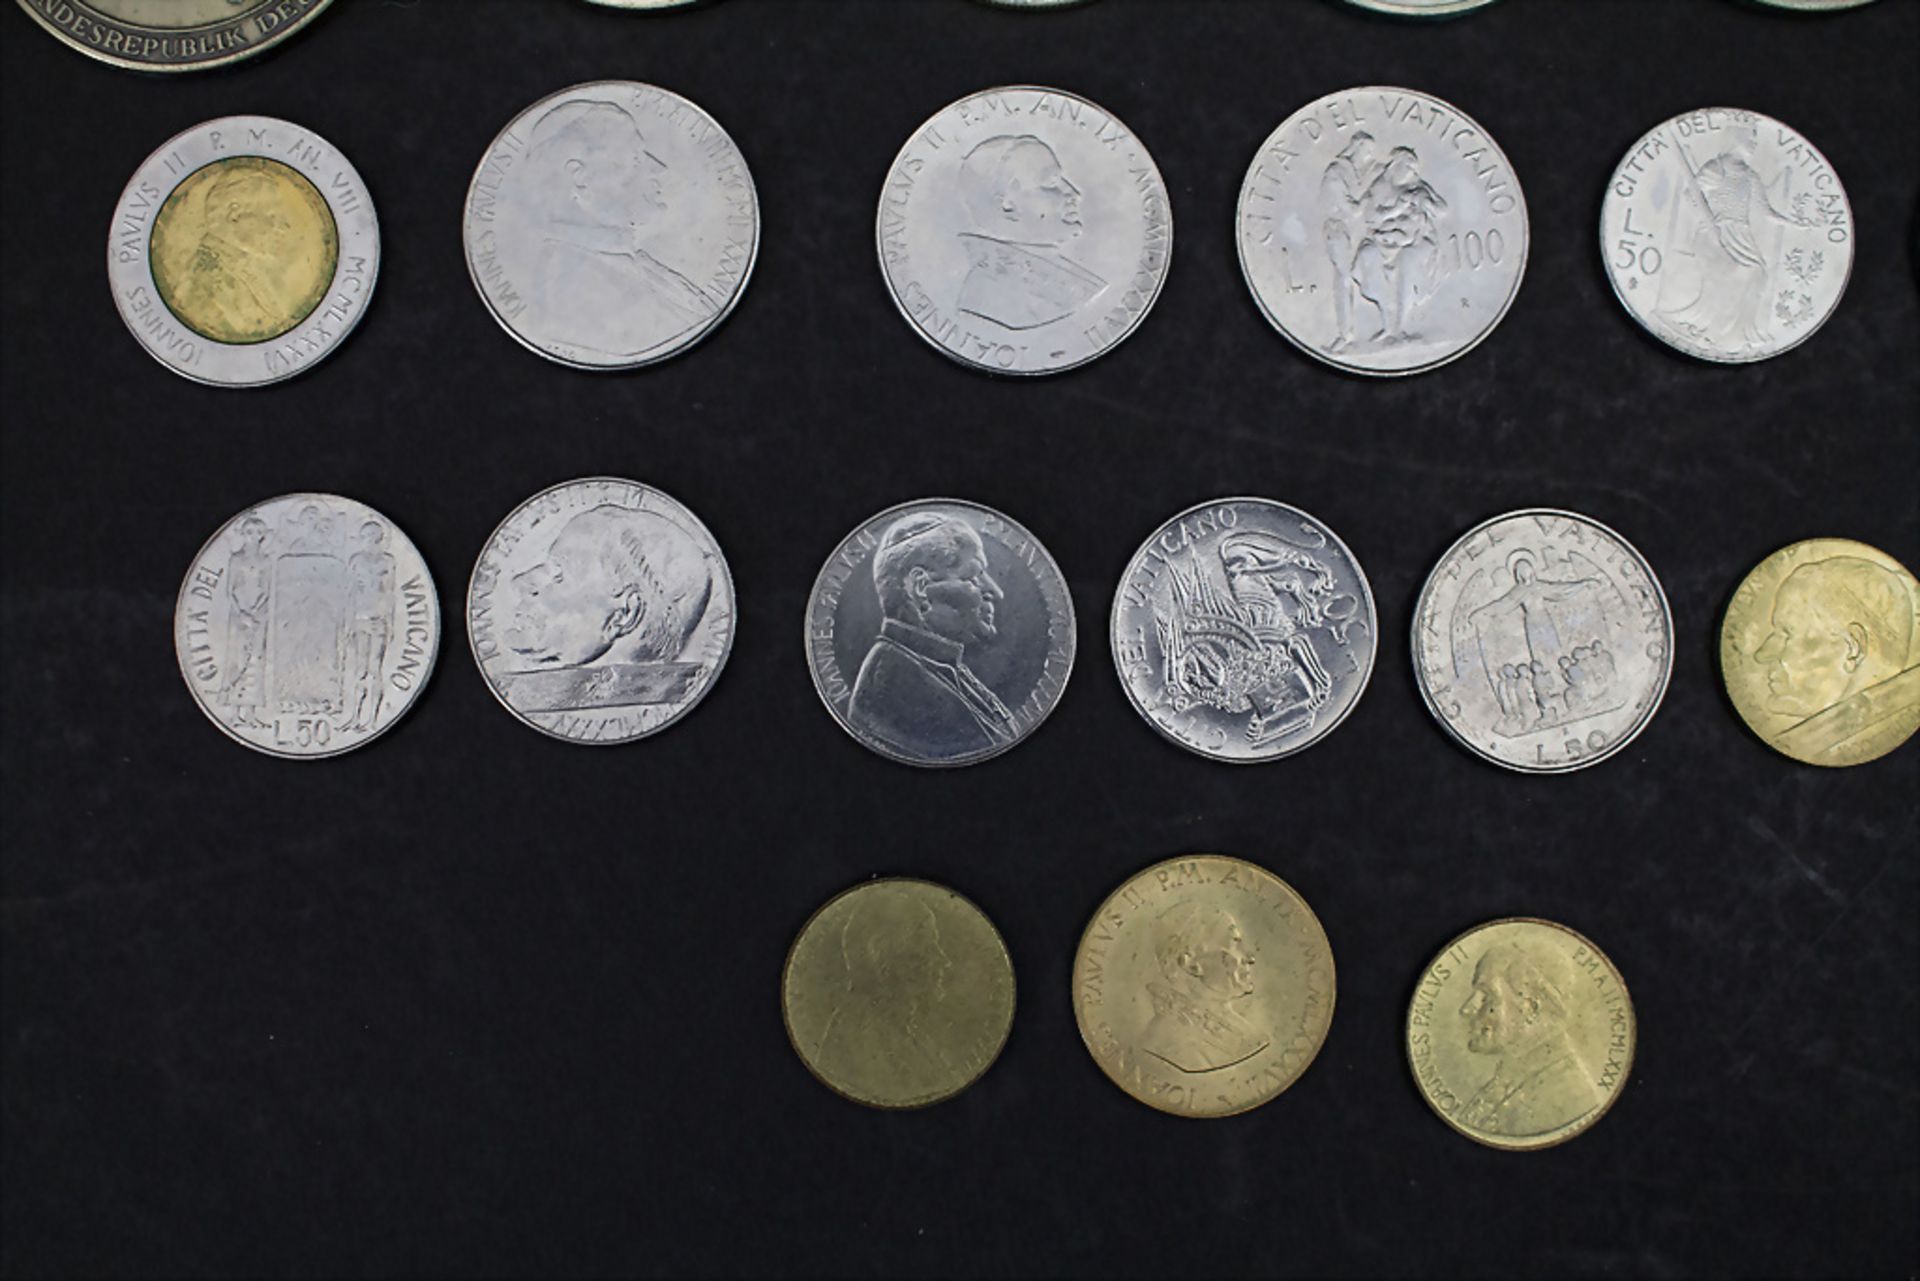 Sammlung Münzen und Medaillen des Vatikan / A collection of Vatican coins and medals - Image 9 of 10